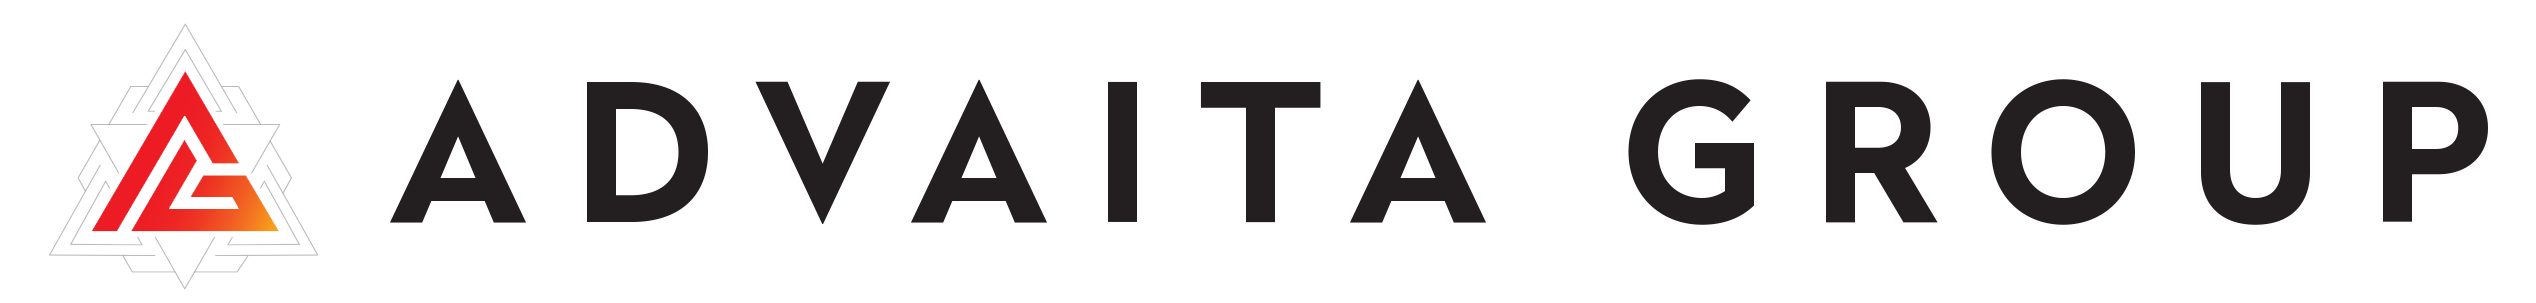 Advaita Group Logo